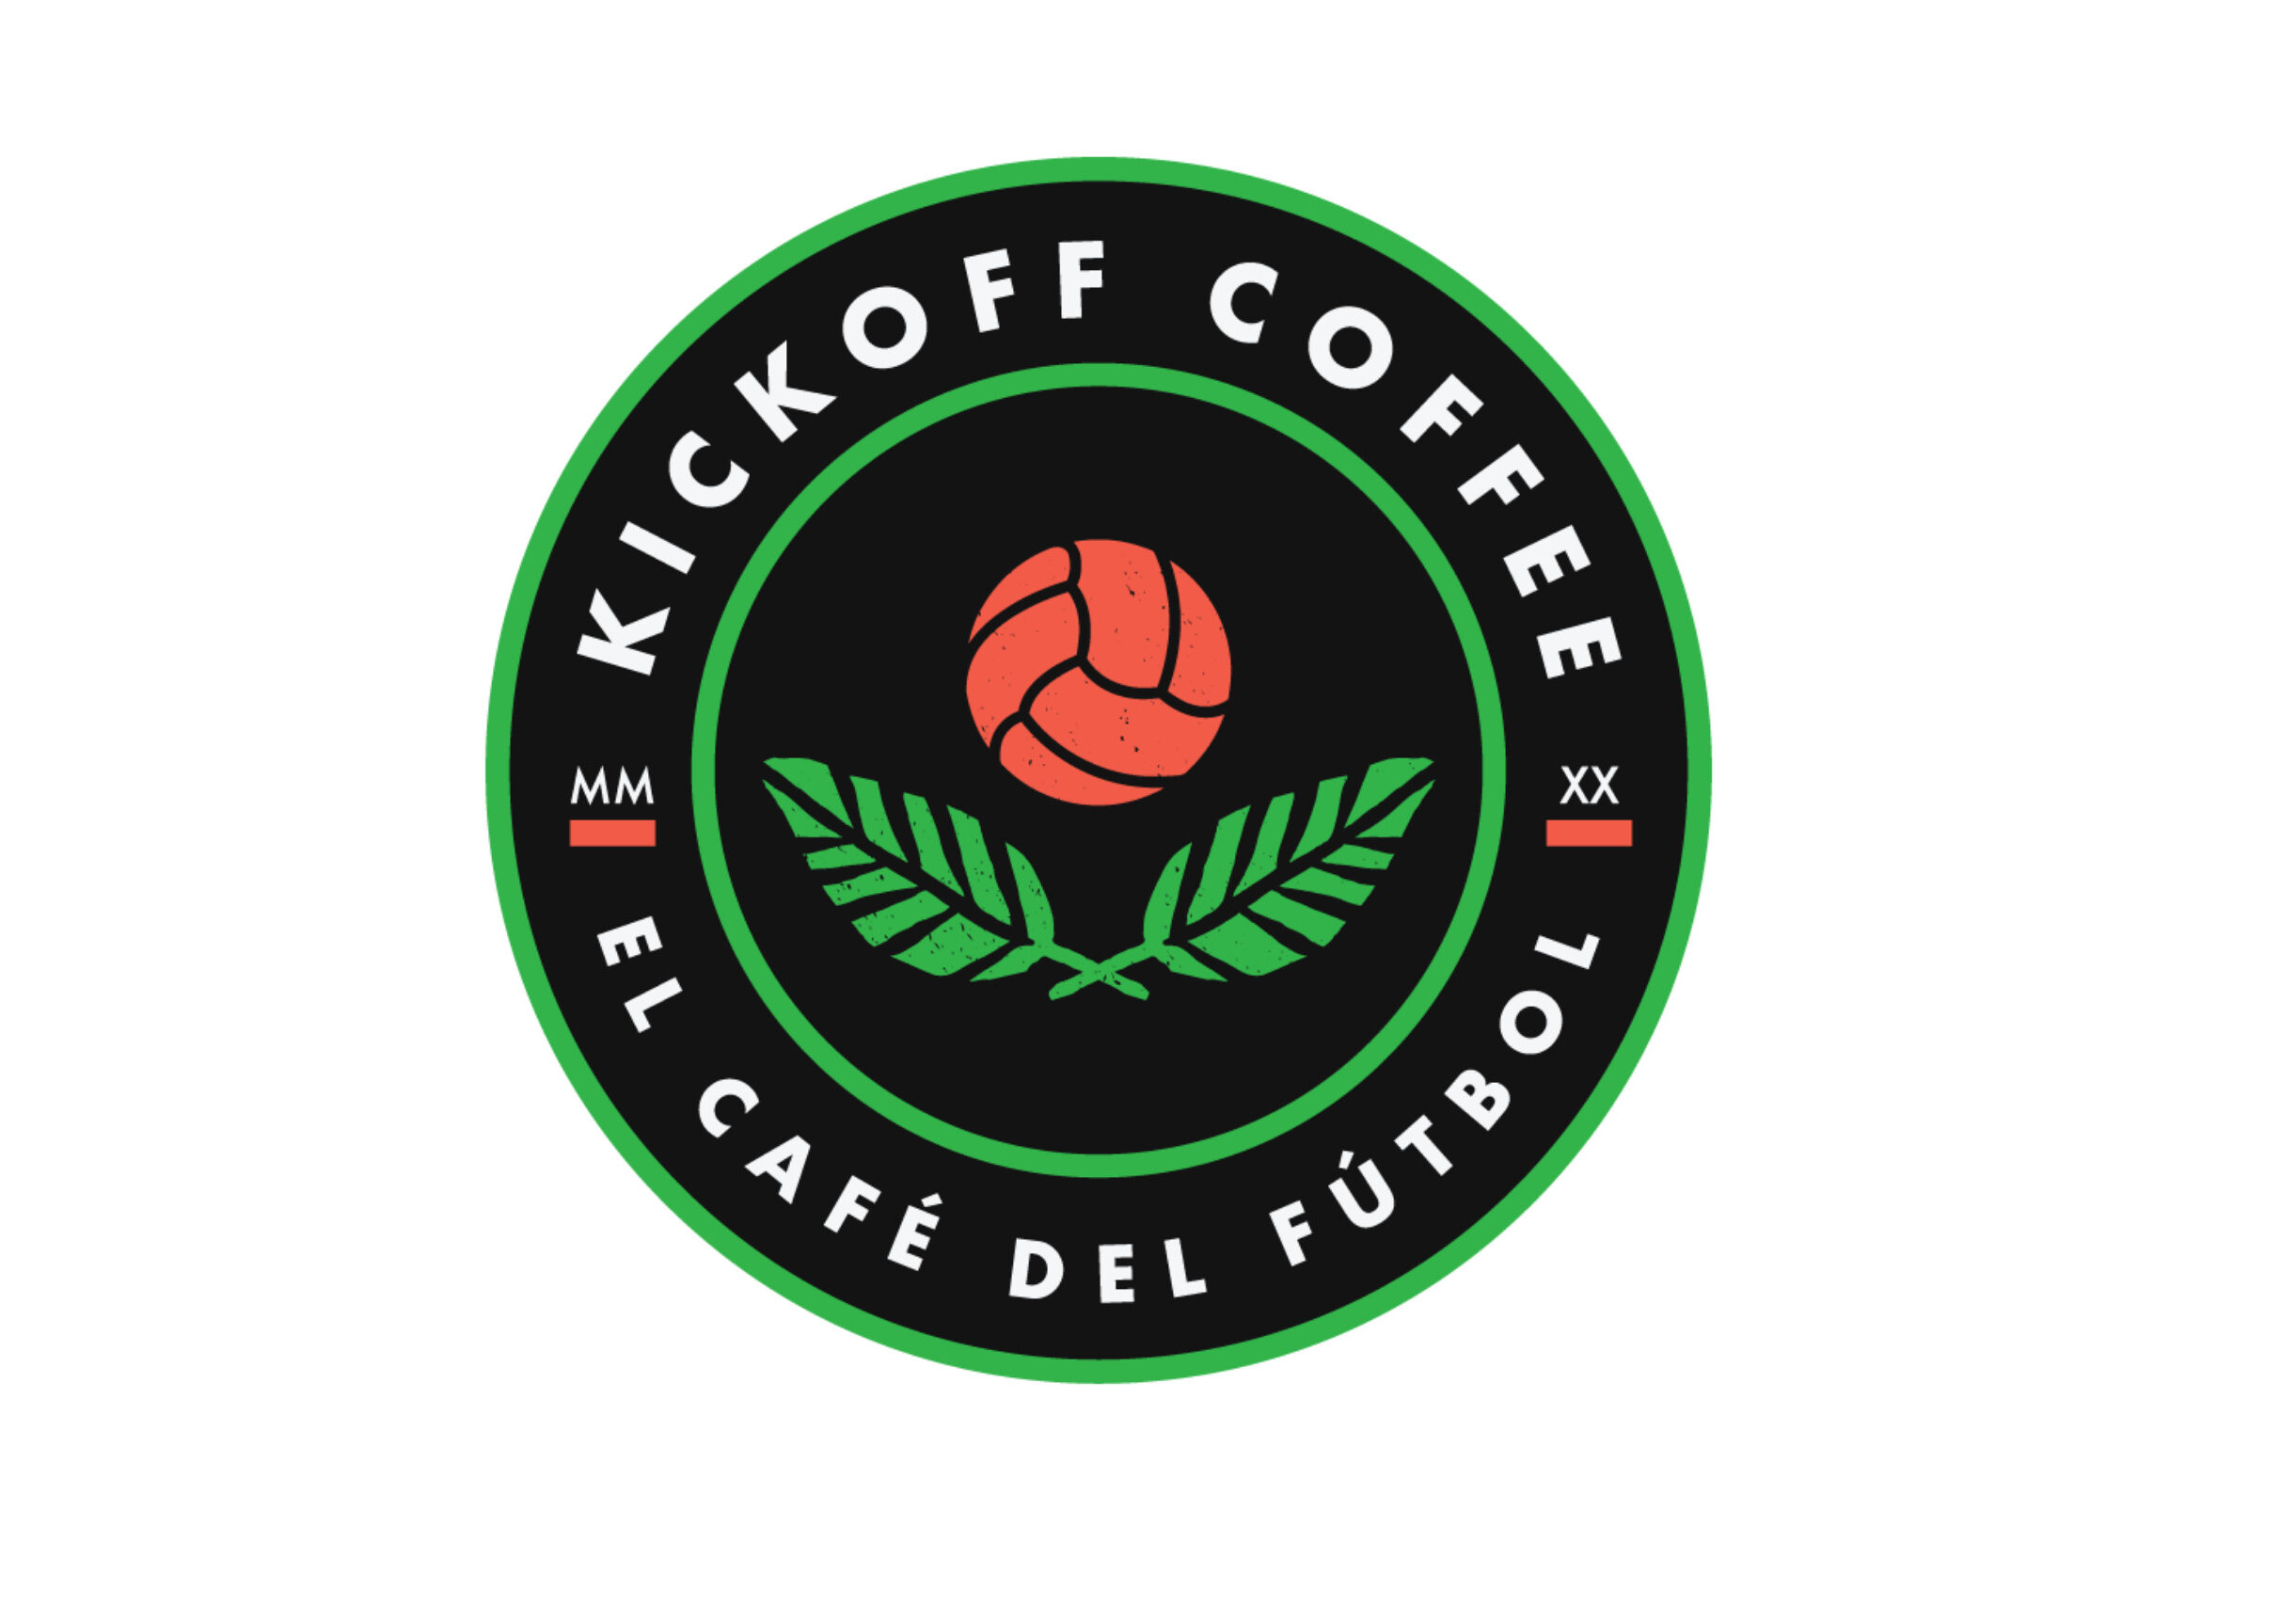 Kickoff Coffee Co